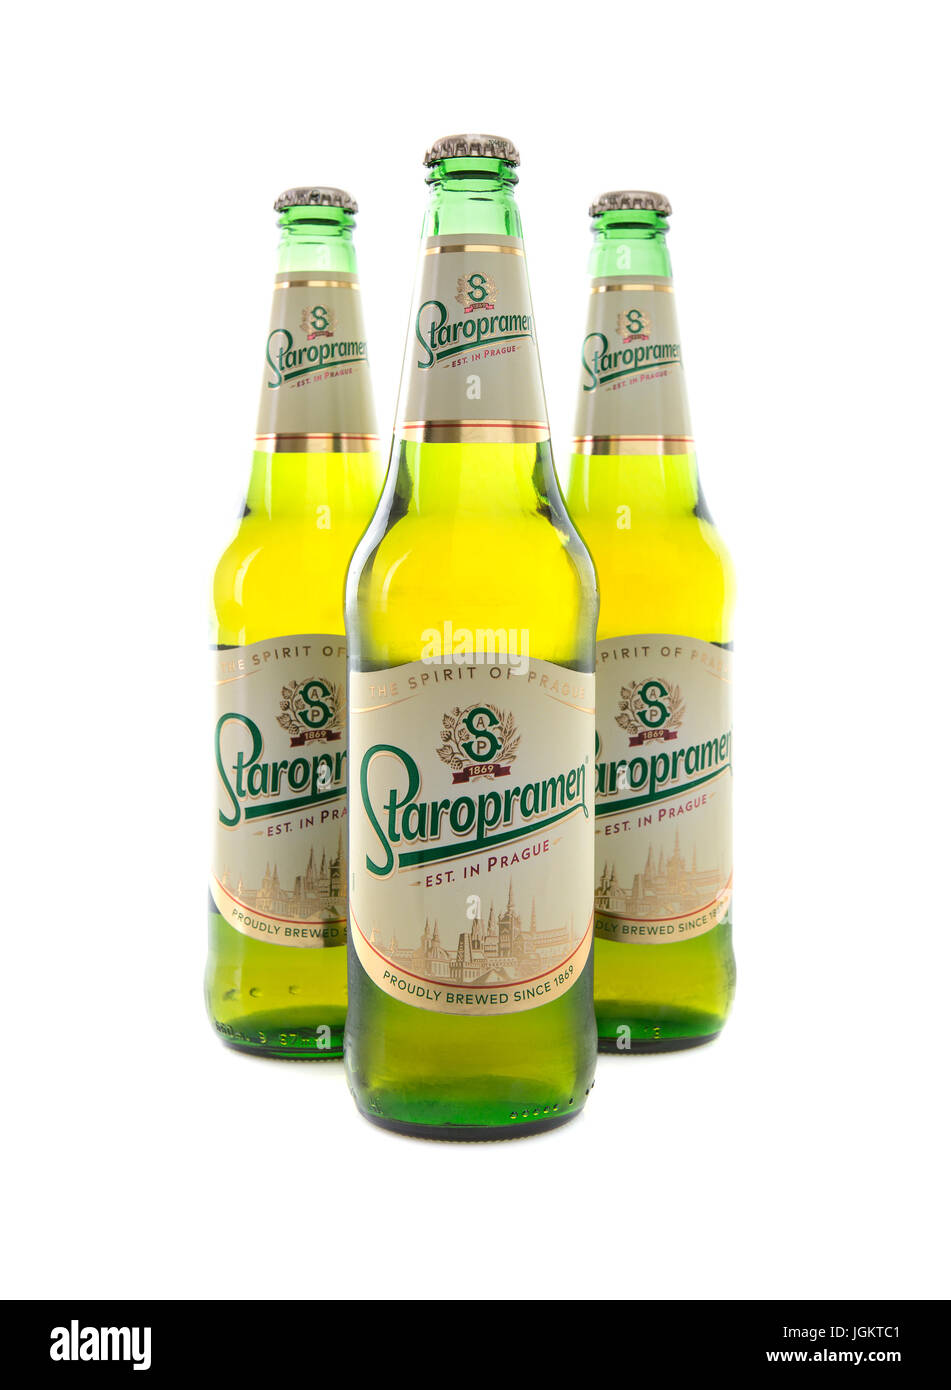 SWINDON, UK - JULY 8, 2017: Three Bottles of Staropramen Czech Beer, brewed in Prague on a white background Stock Photo